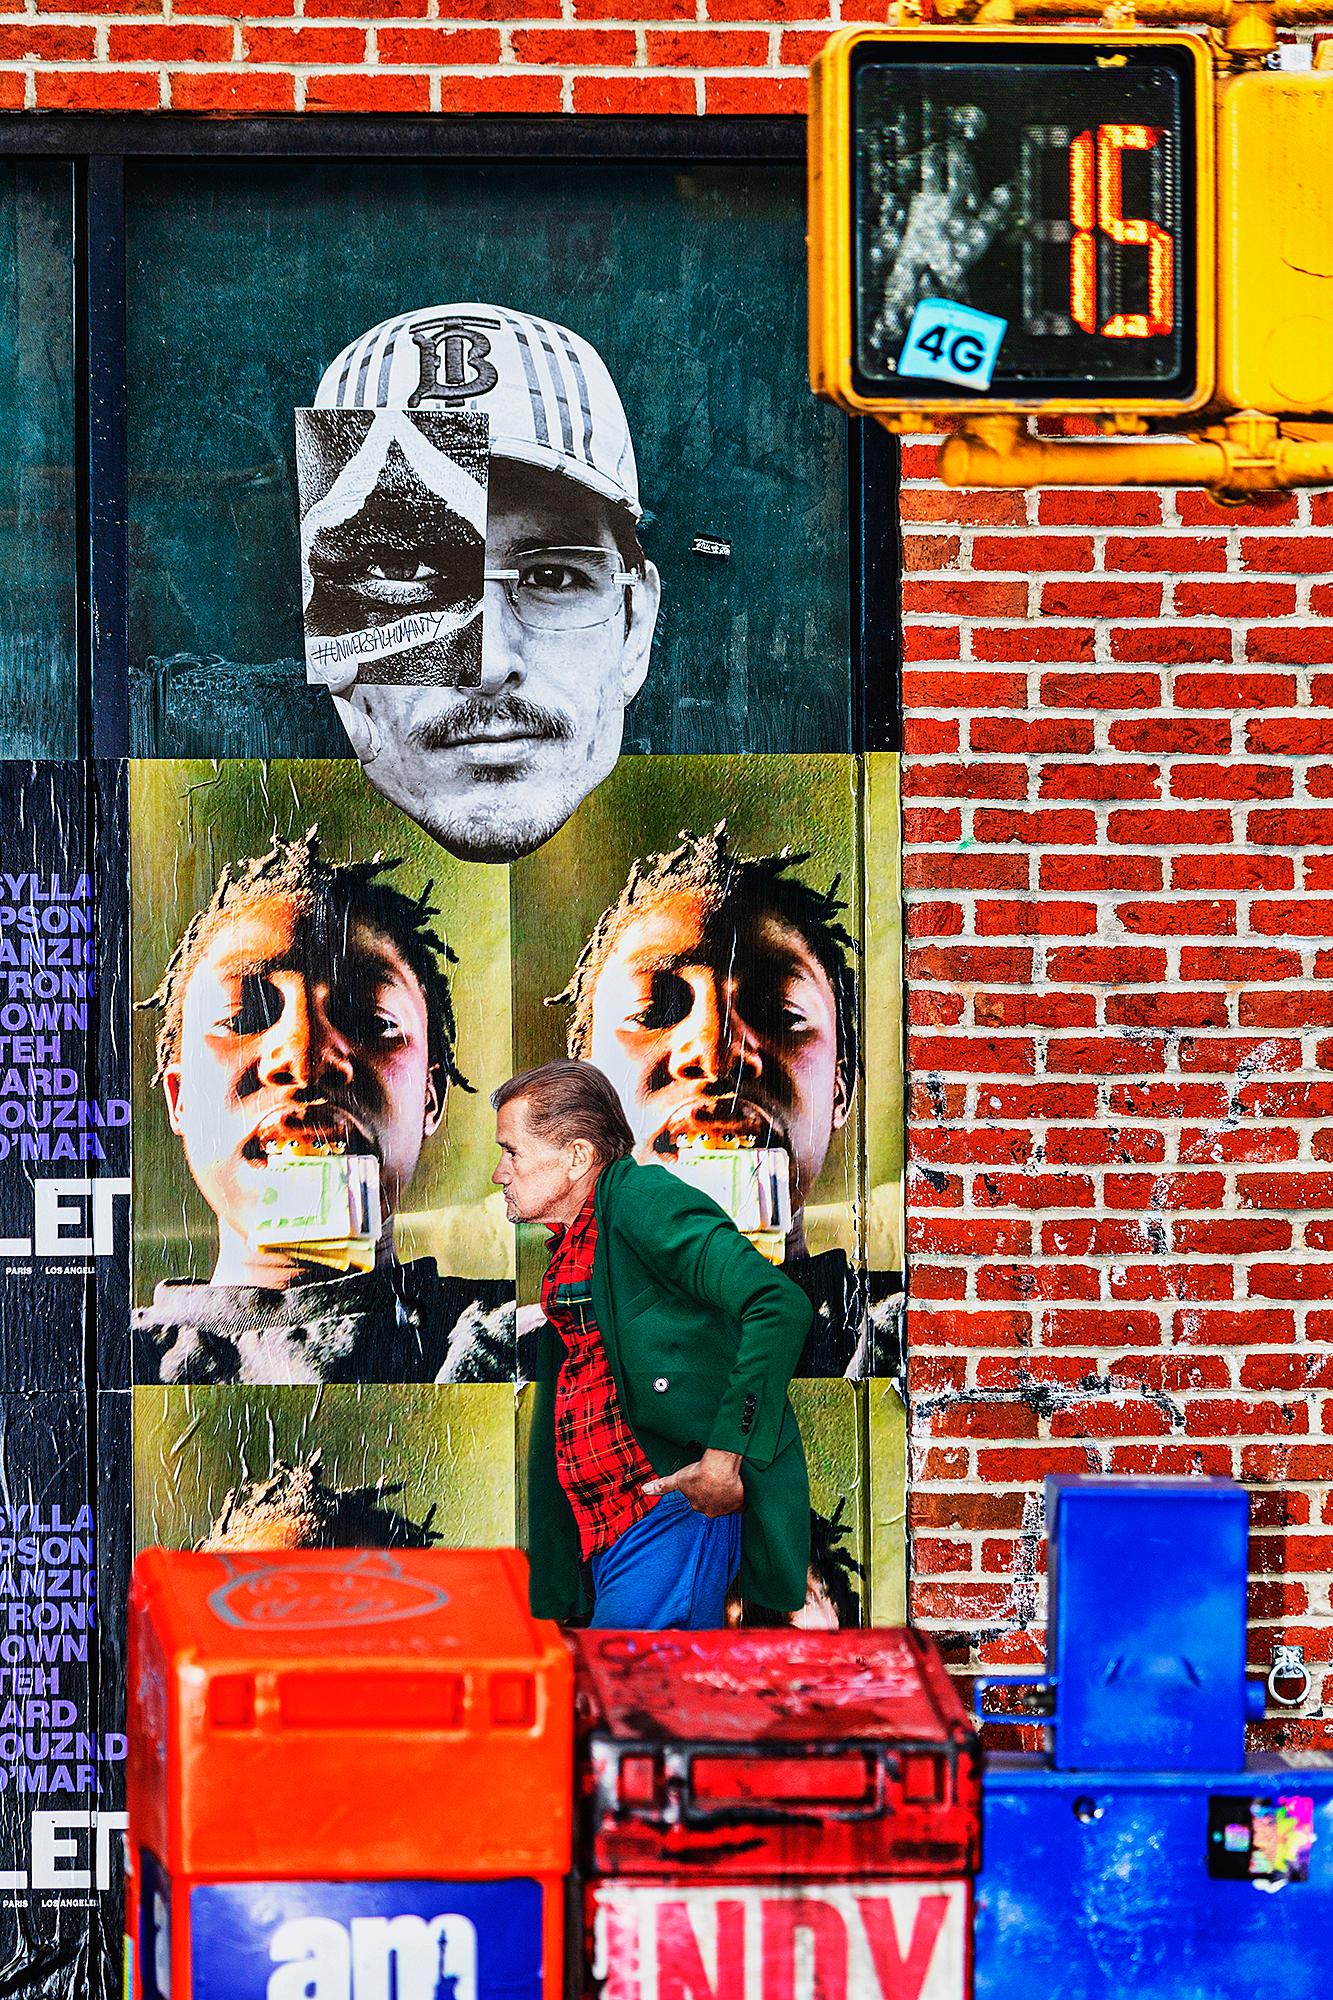 Mitchell Funk Figurative Photograph - Gritty Street Photography with Geometric Billboards Manhattan Street Scene